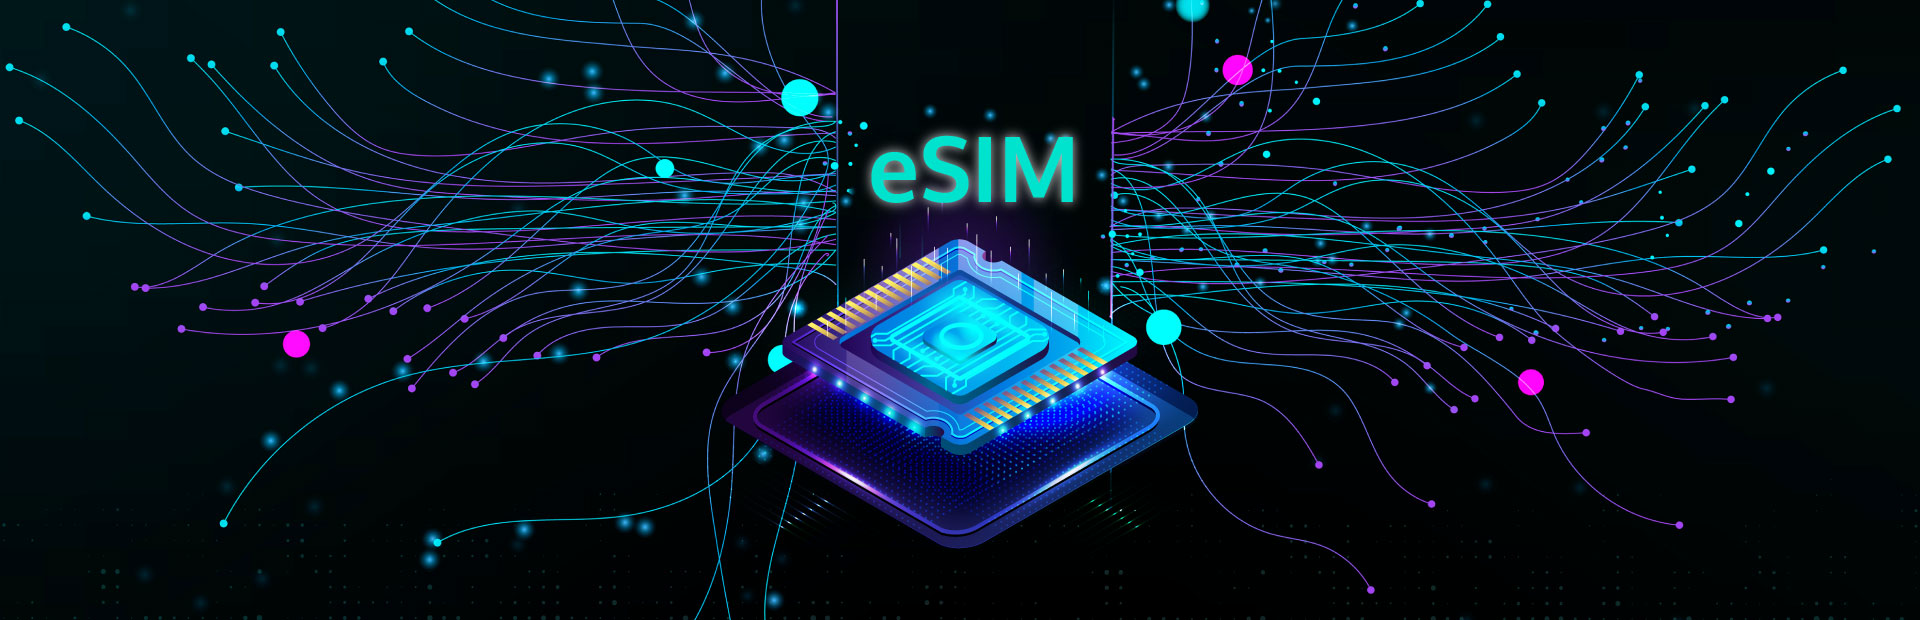 eSIM main banner